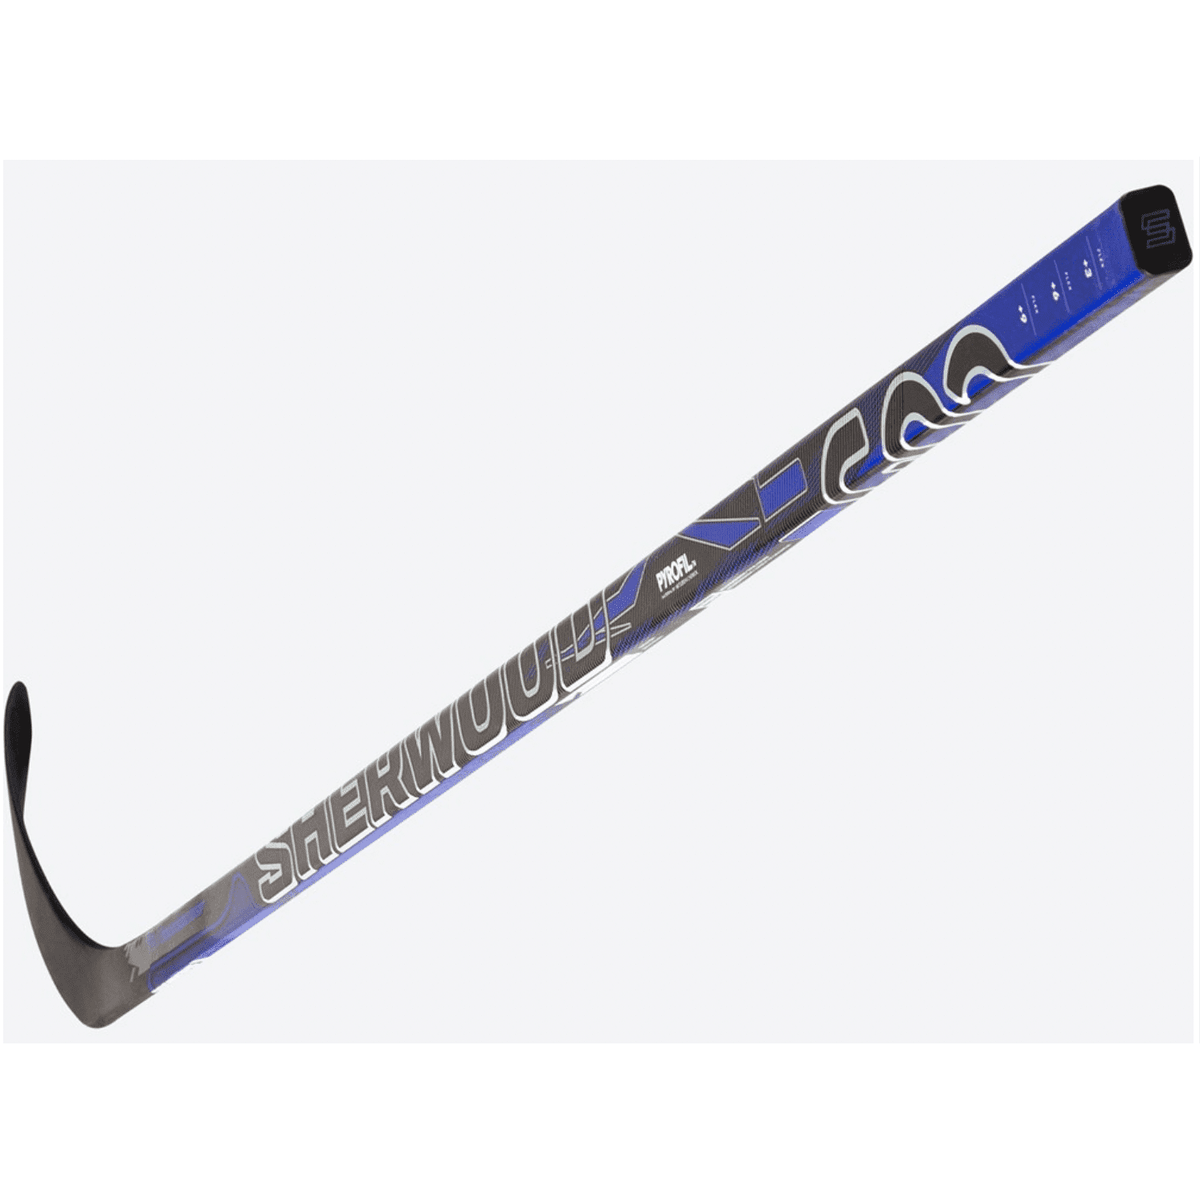 Sherwood Code TMP Pro Ice Hockey Stick Snr